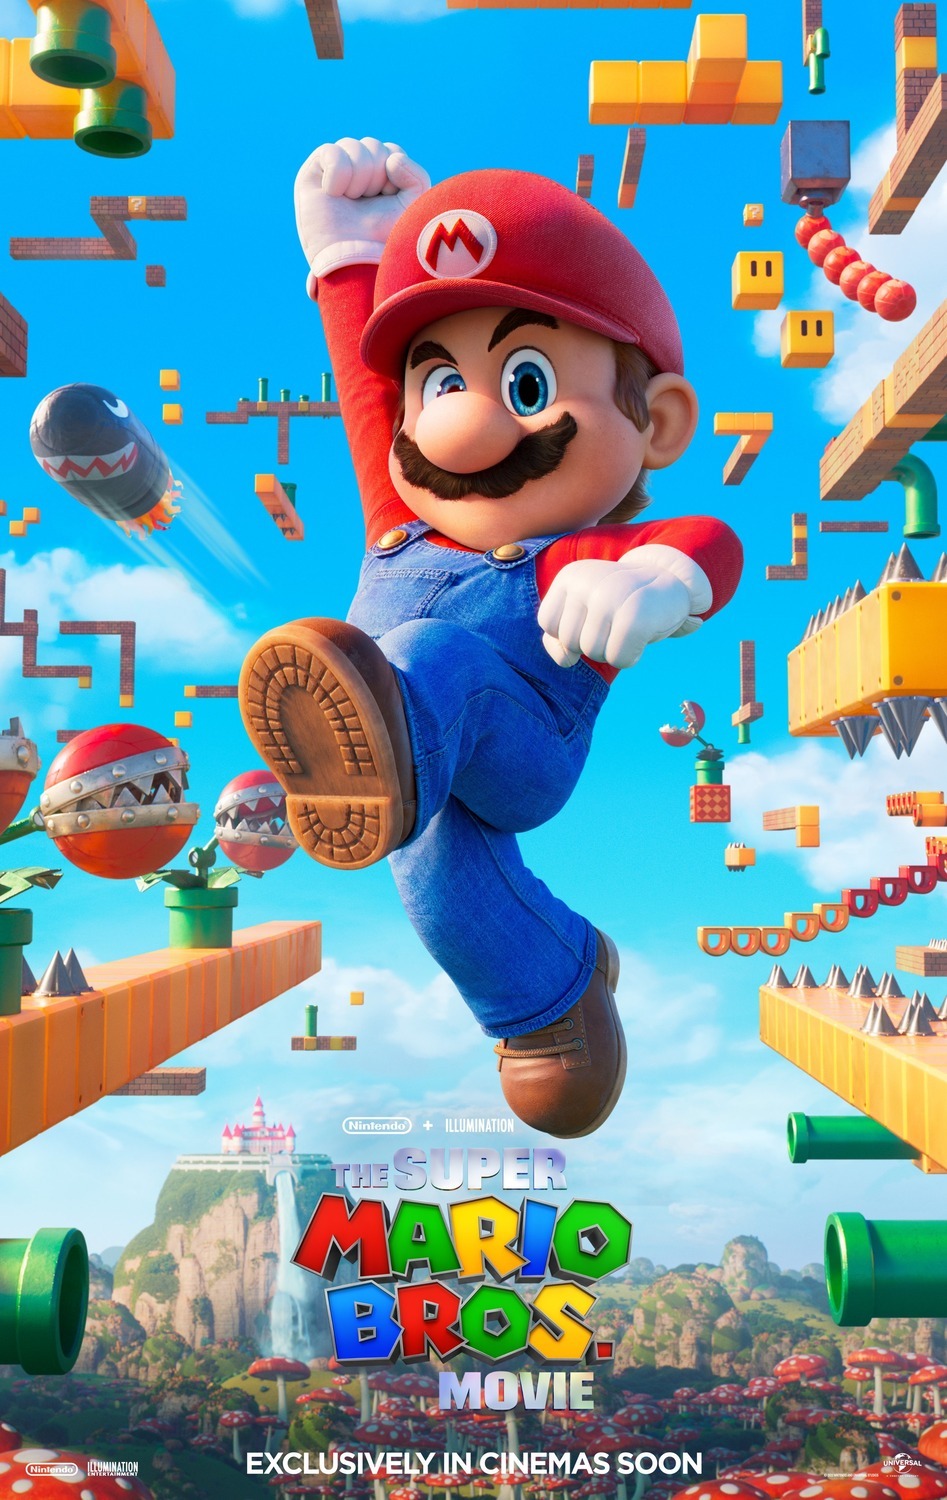 Super Mario Bros. Le Film - Copyright 2022 Nintendo and Universal Studios